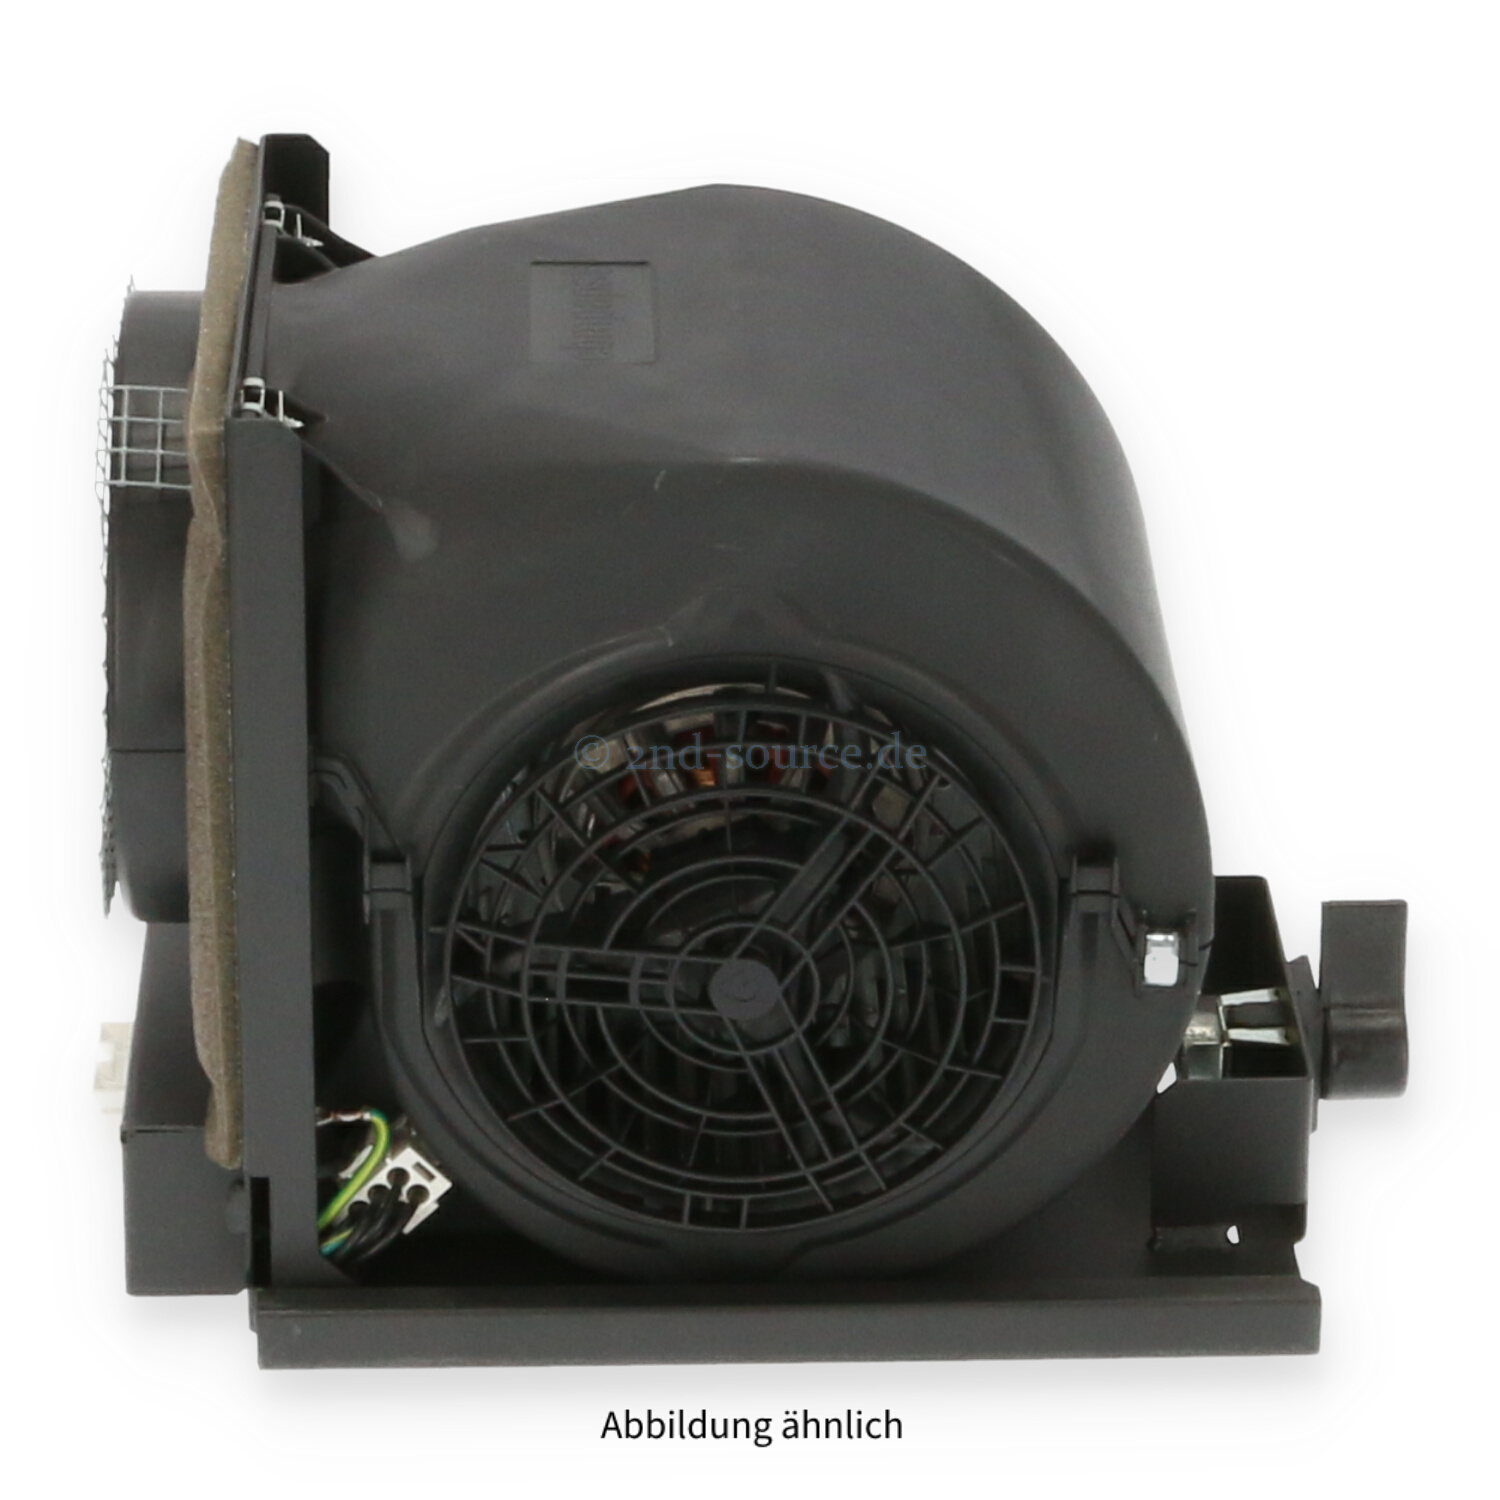 HPE Fan Module Modular Cooling System G2 463362-001